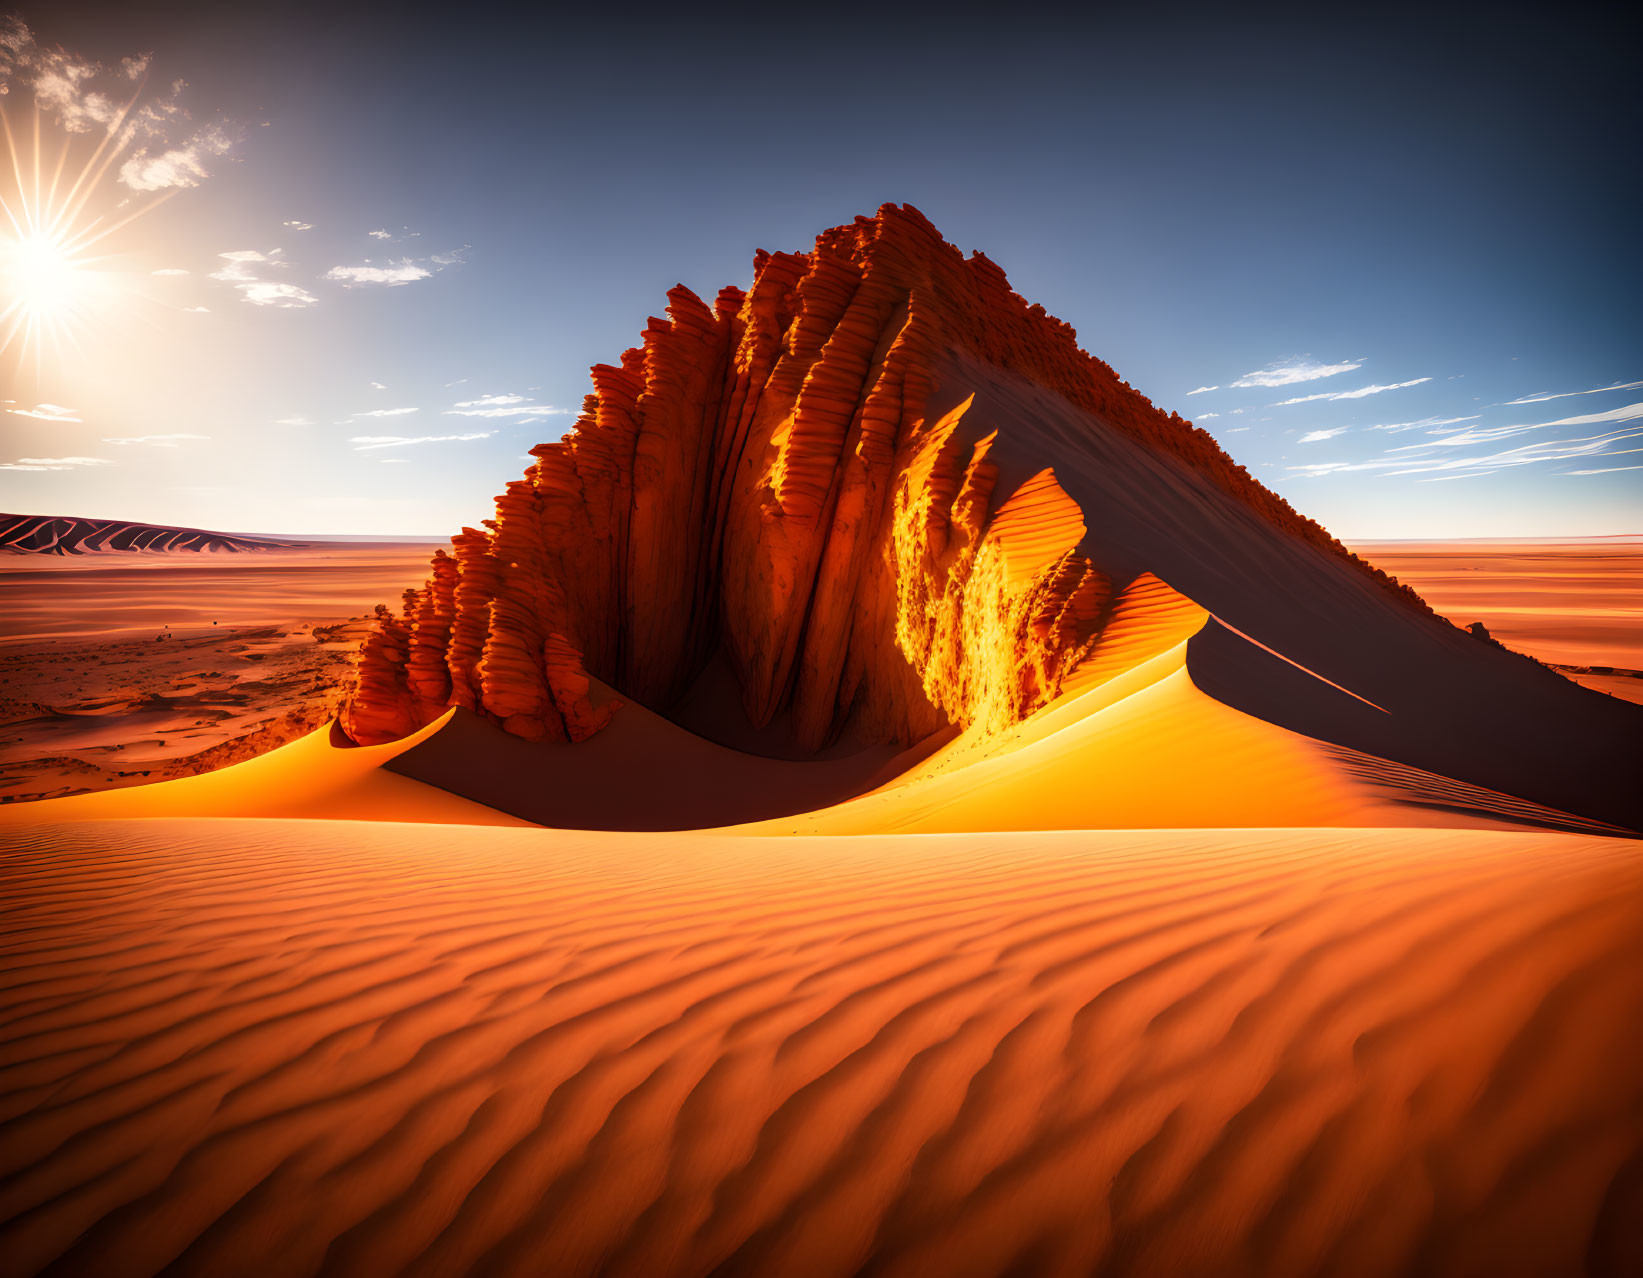 Desert landscape with sandstone formation and sunrise.